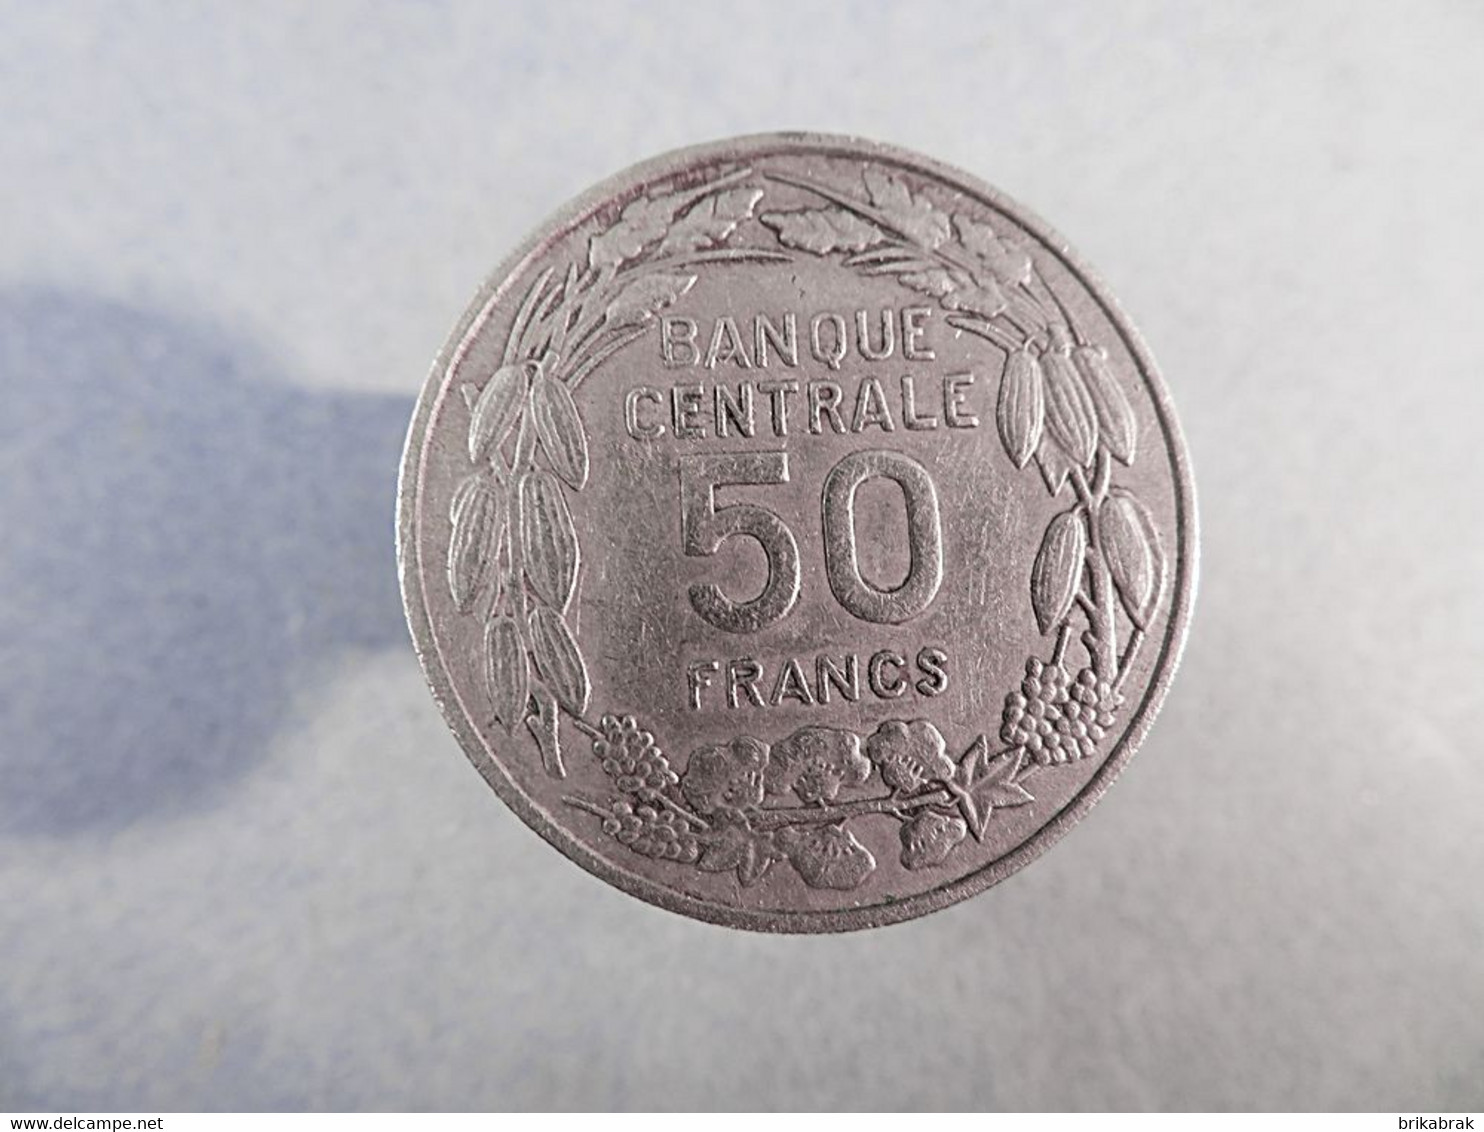 PIECE 50 FRANCS CAMEROUN 1960 - Monnaie Afrique Bazor - Cameroun